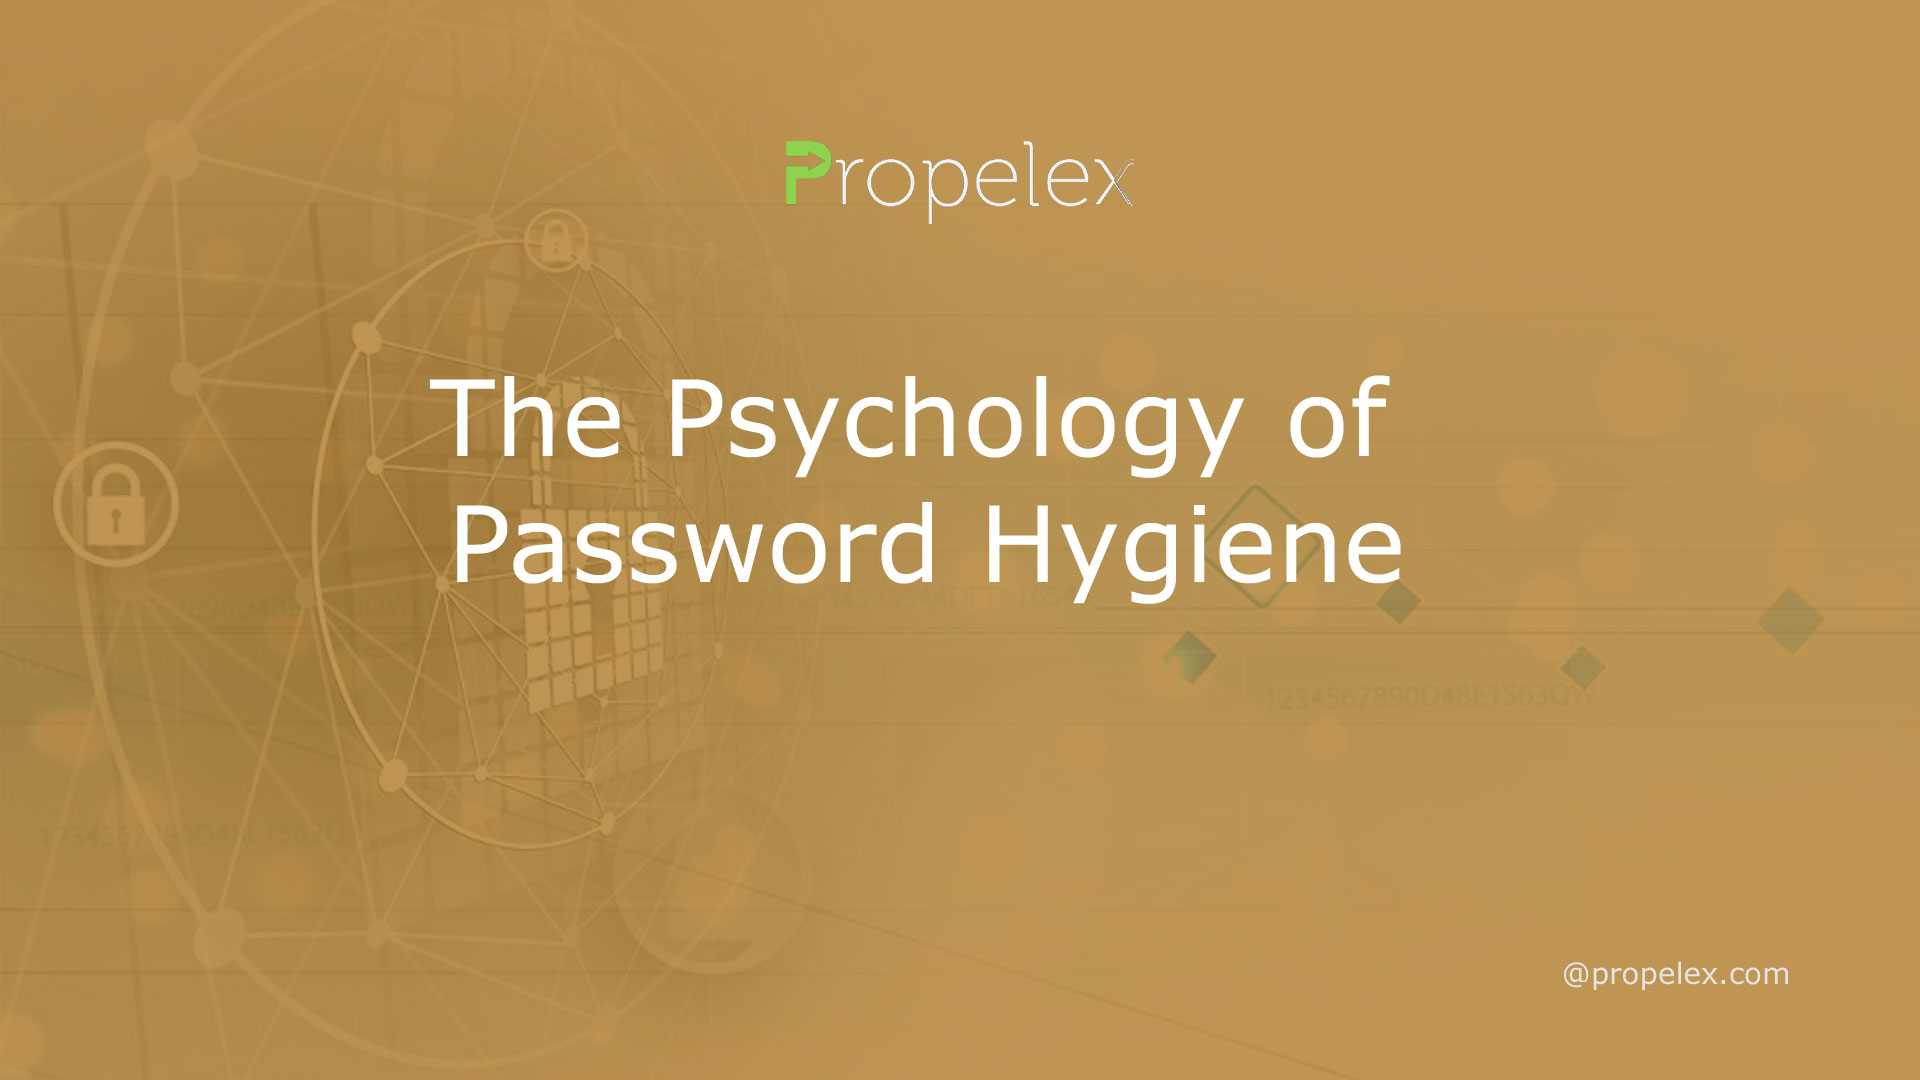 The Psychology of Password Hygiene